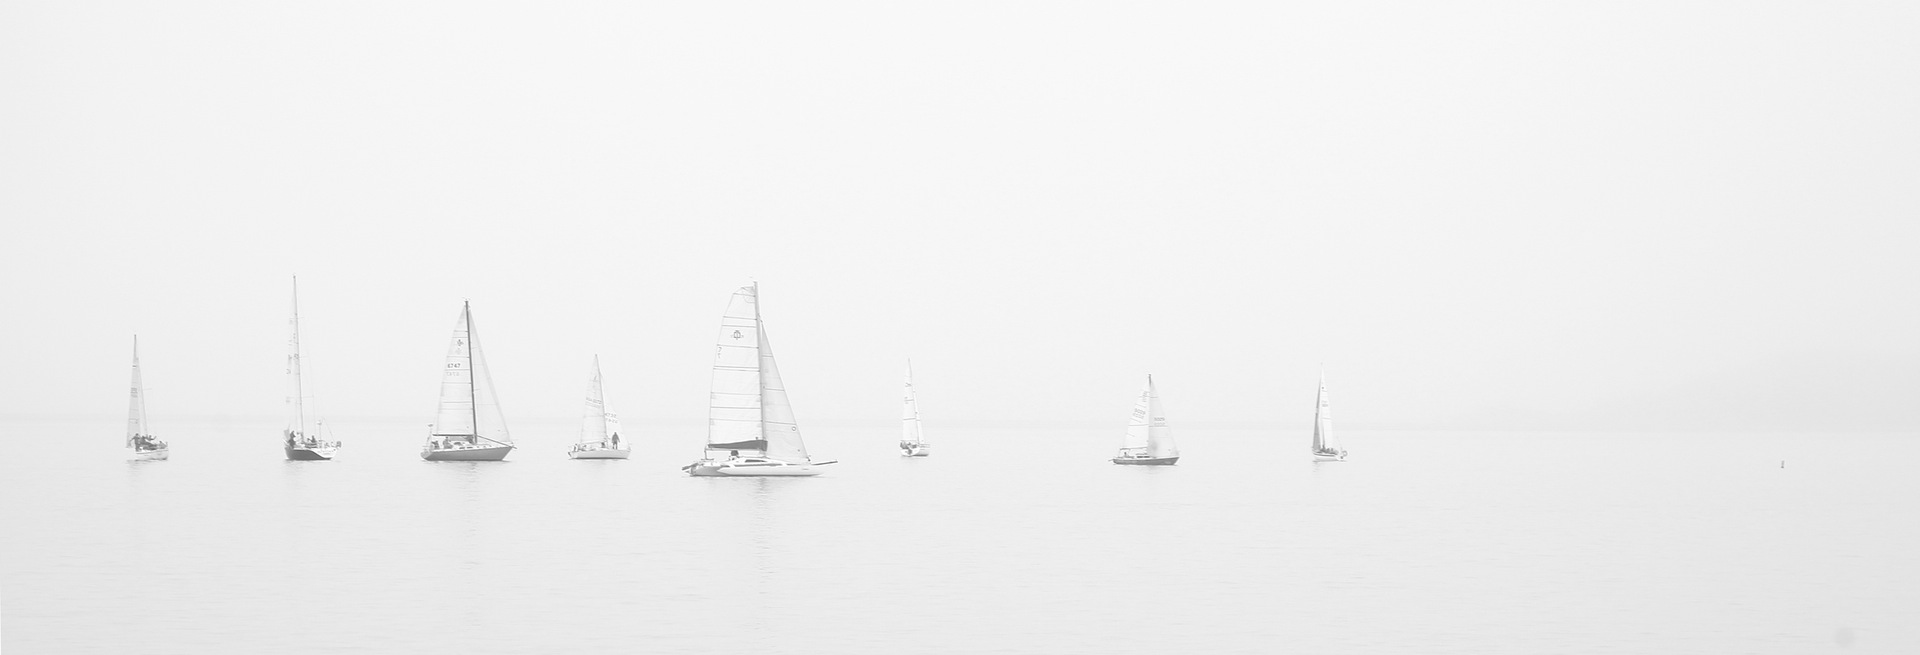 sea-black-and-white-ocean-boats.jpg